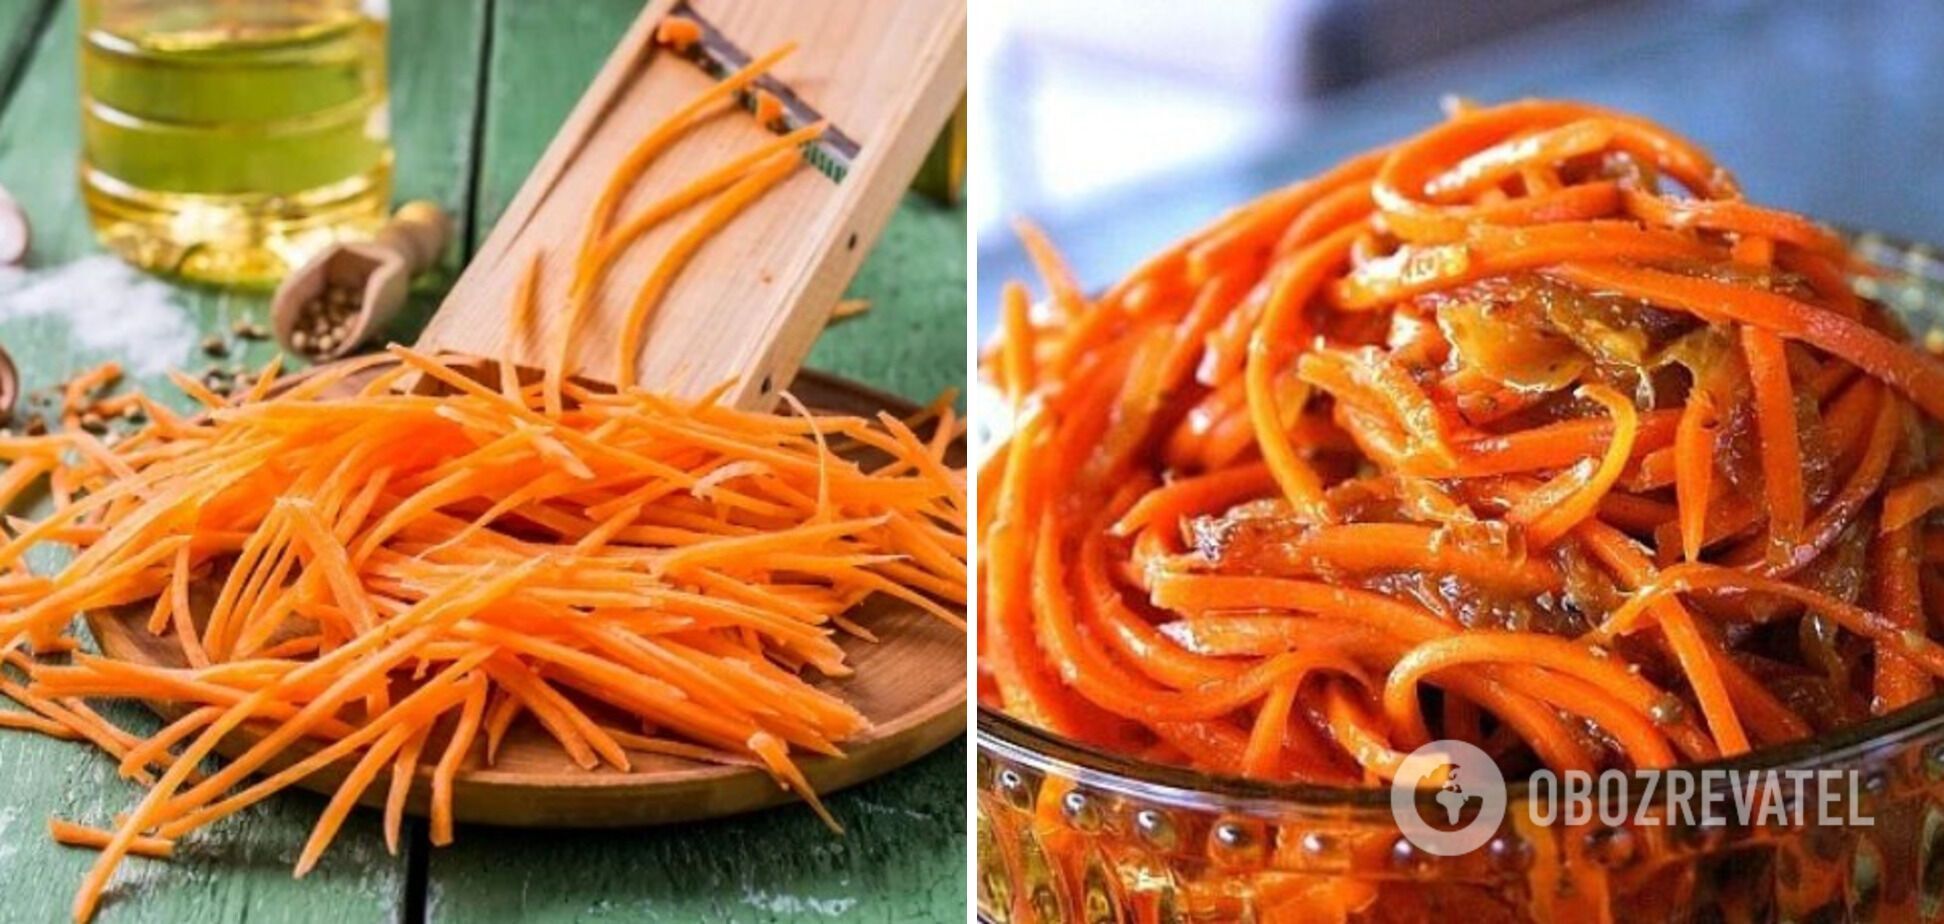 Korean quick-cooking carrots